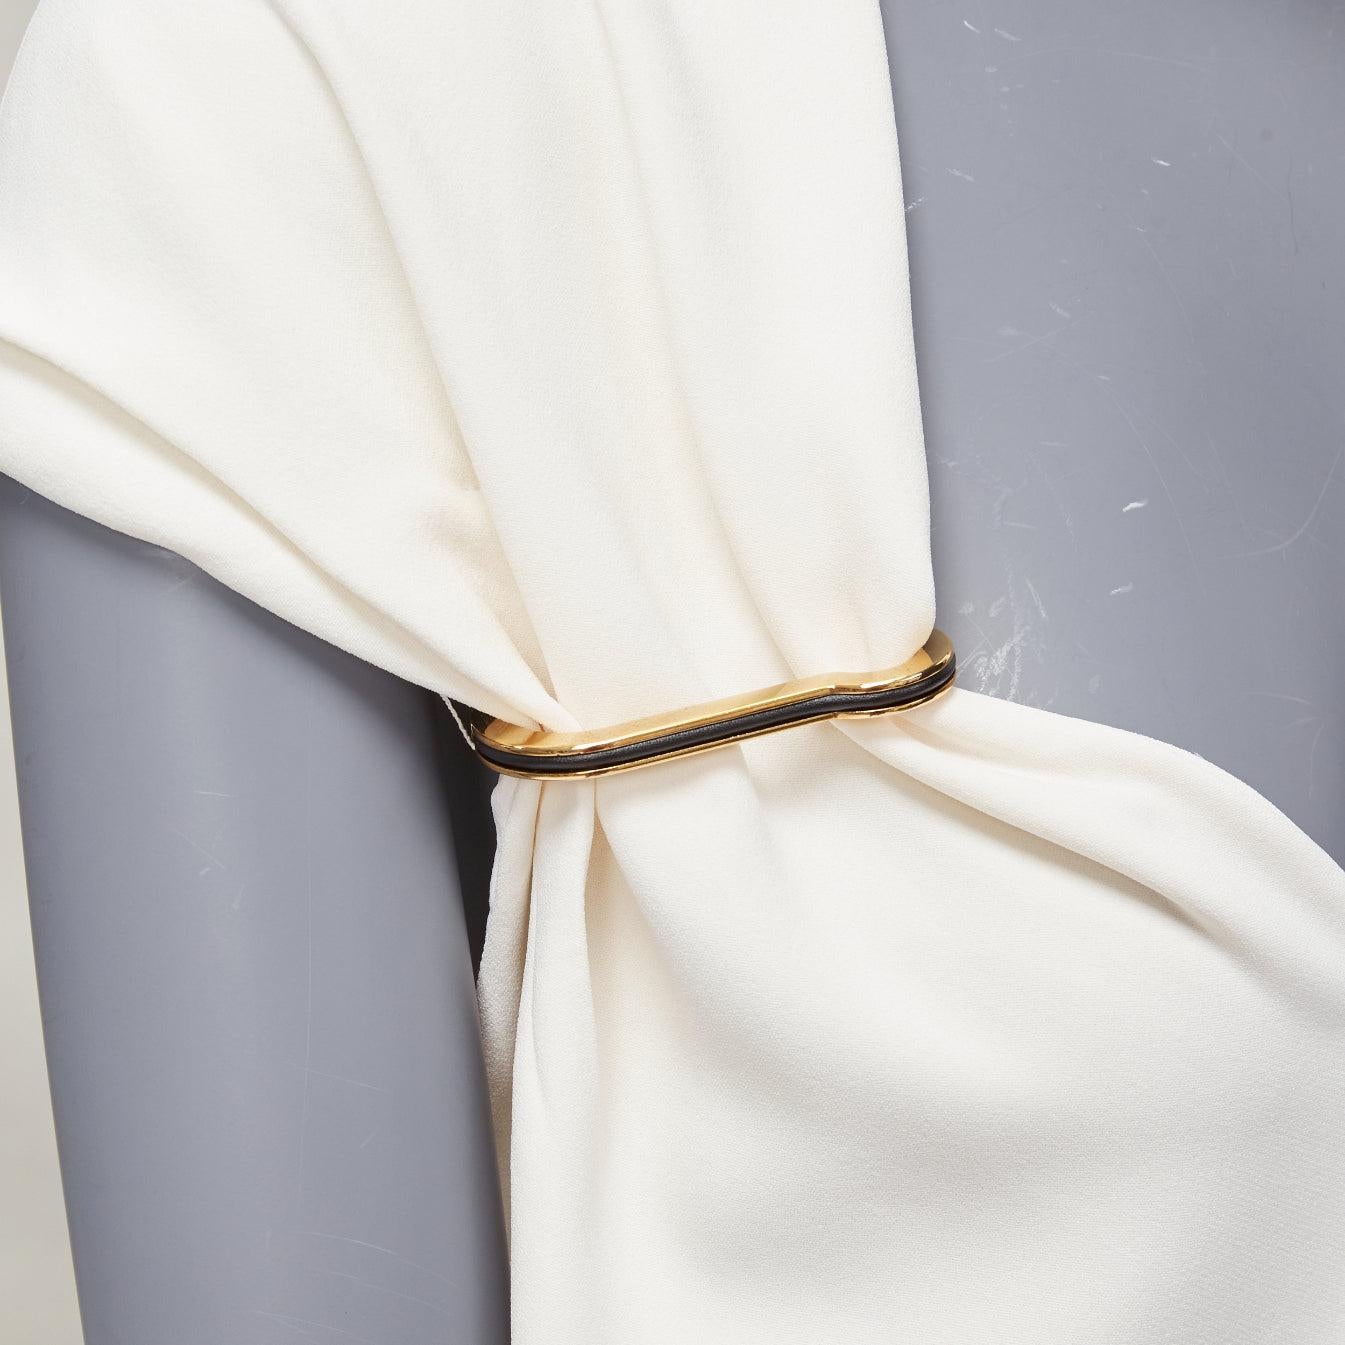 BALENCIAGA 2014 cream crepe gold carabiner buckle V neck vest top FR38 M
Reference: NKLL/A00176
Brand: Balenciaga
Designer: Nicolas Ghesquiere
Collection: 2014
Material: Rayon, Blend
Color: Cream
Pattern: Solid
Closure: Pullover
Lining: Cream